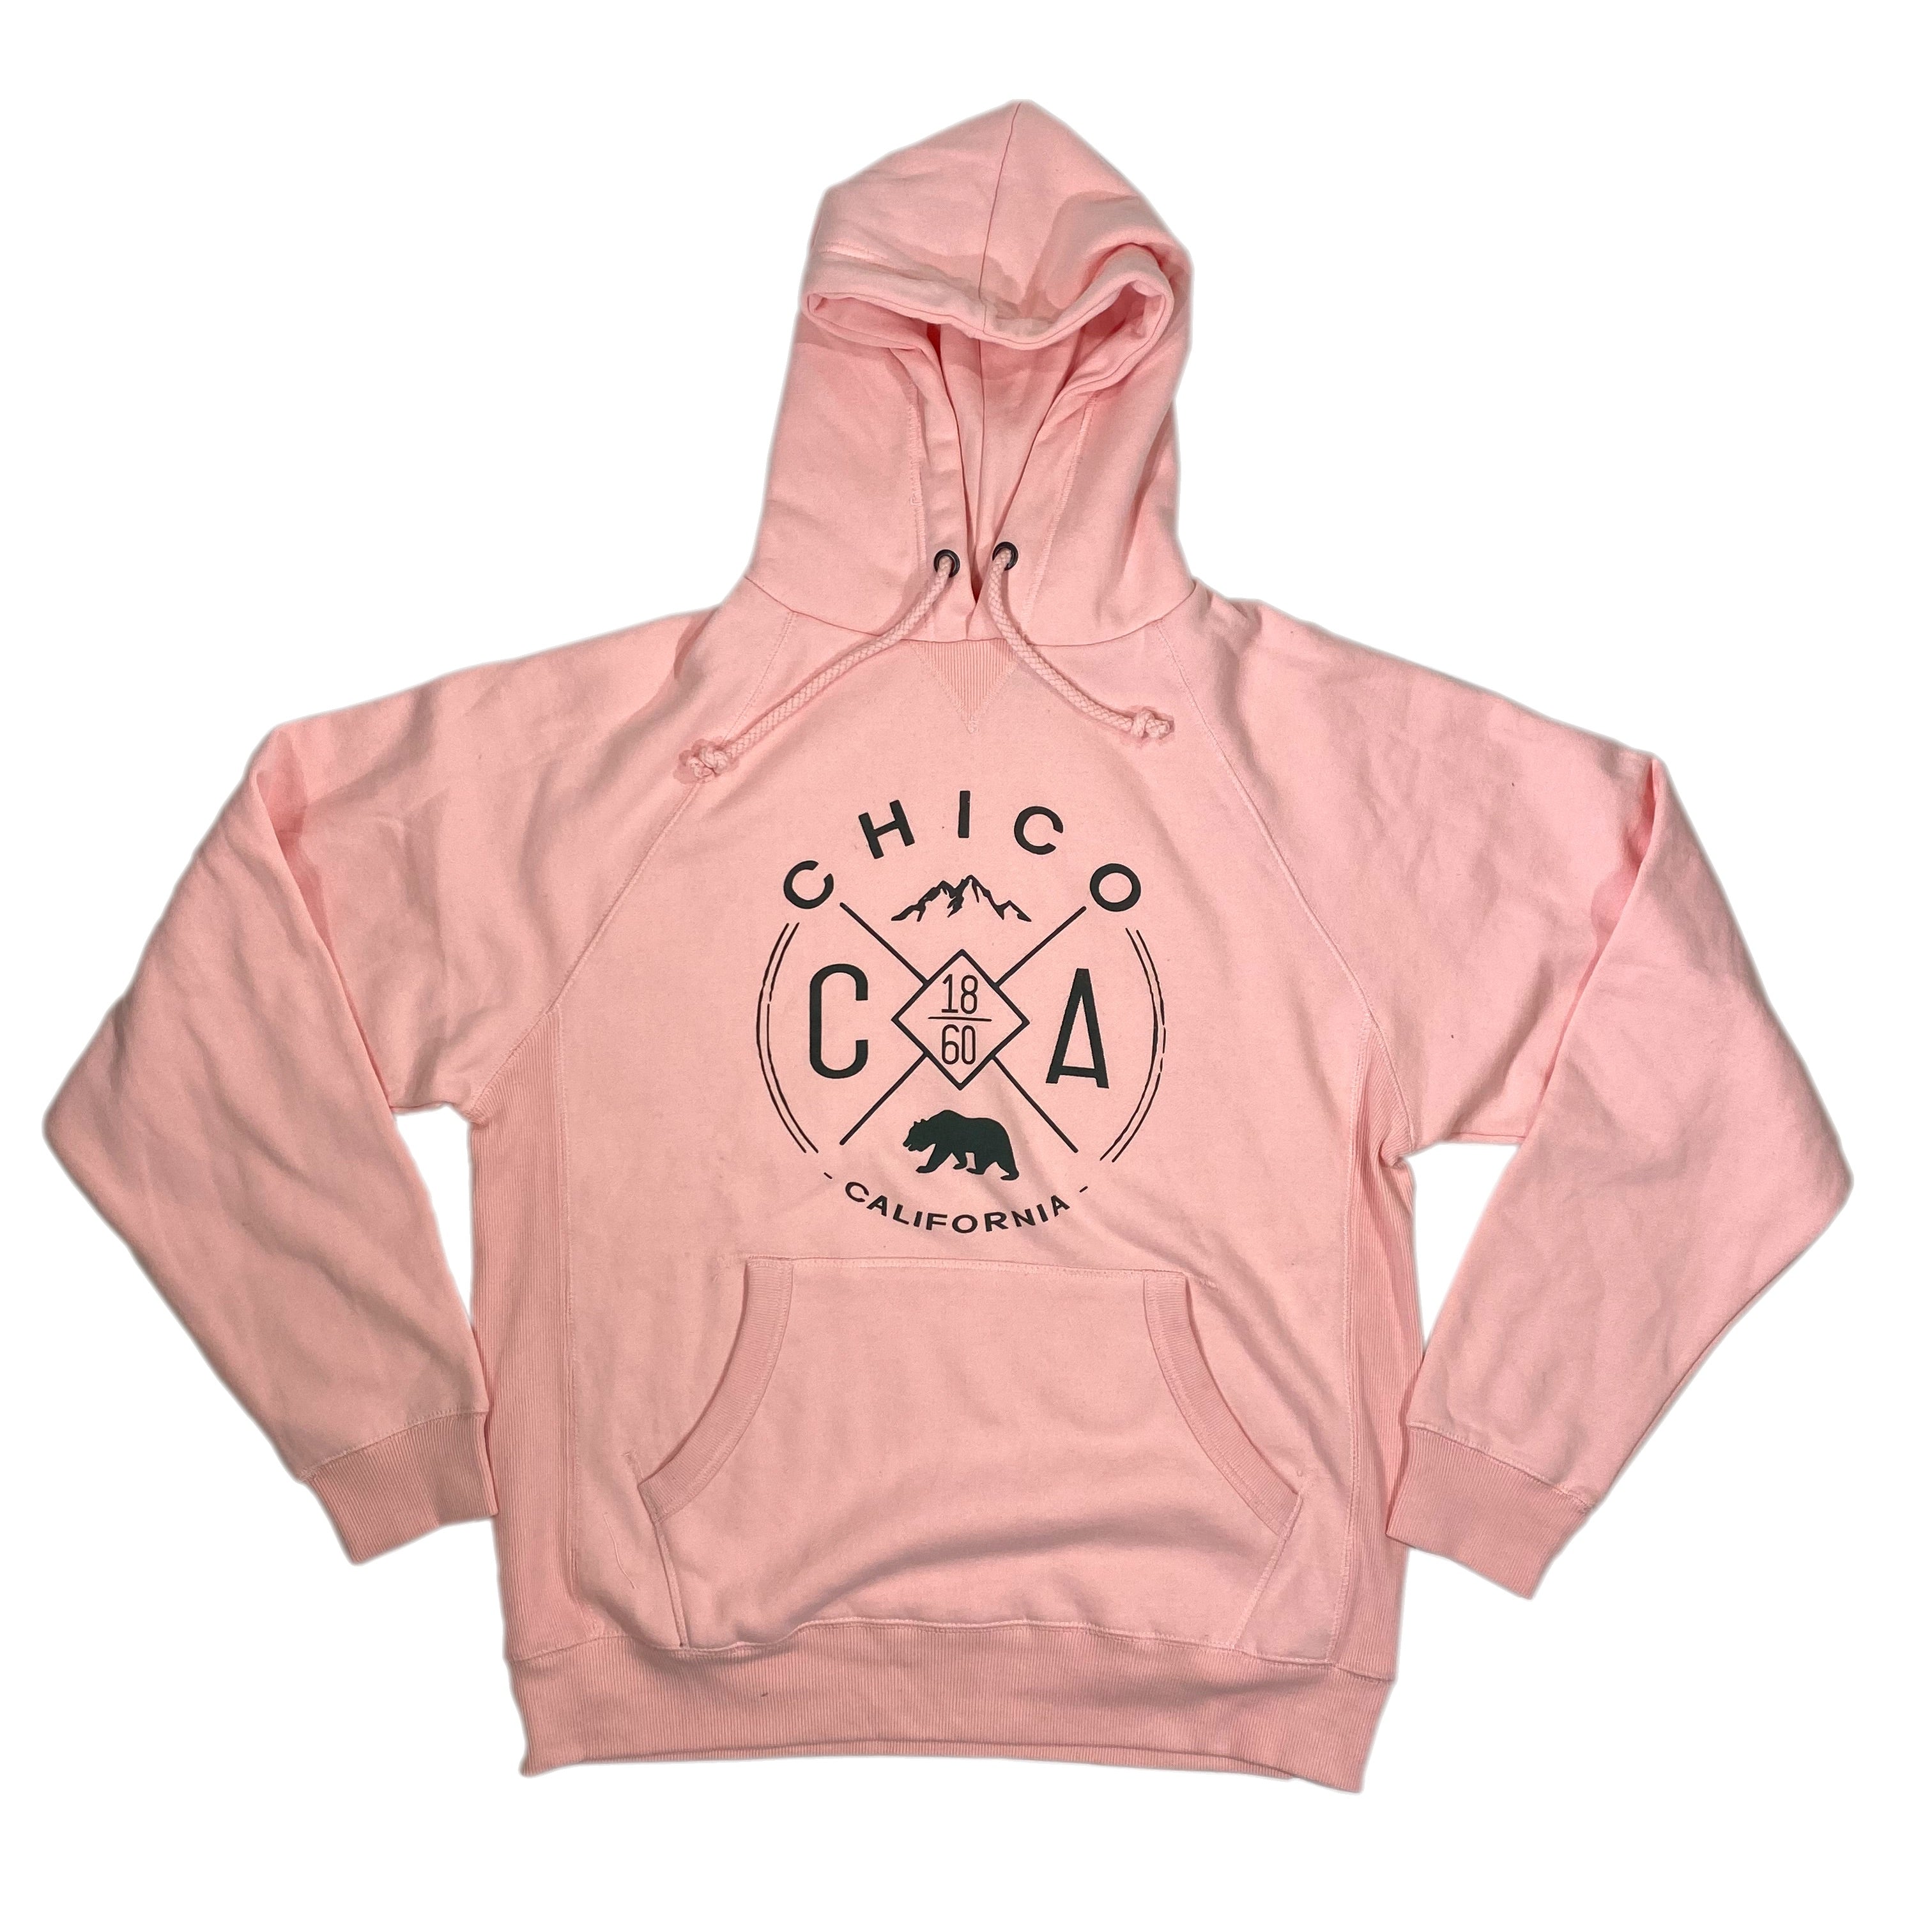 Handmade Mountain - Hooded Chico Sweatshirt SHELL PINK S  3248414.11